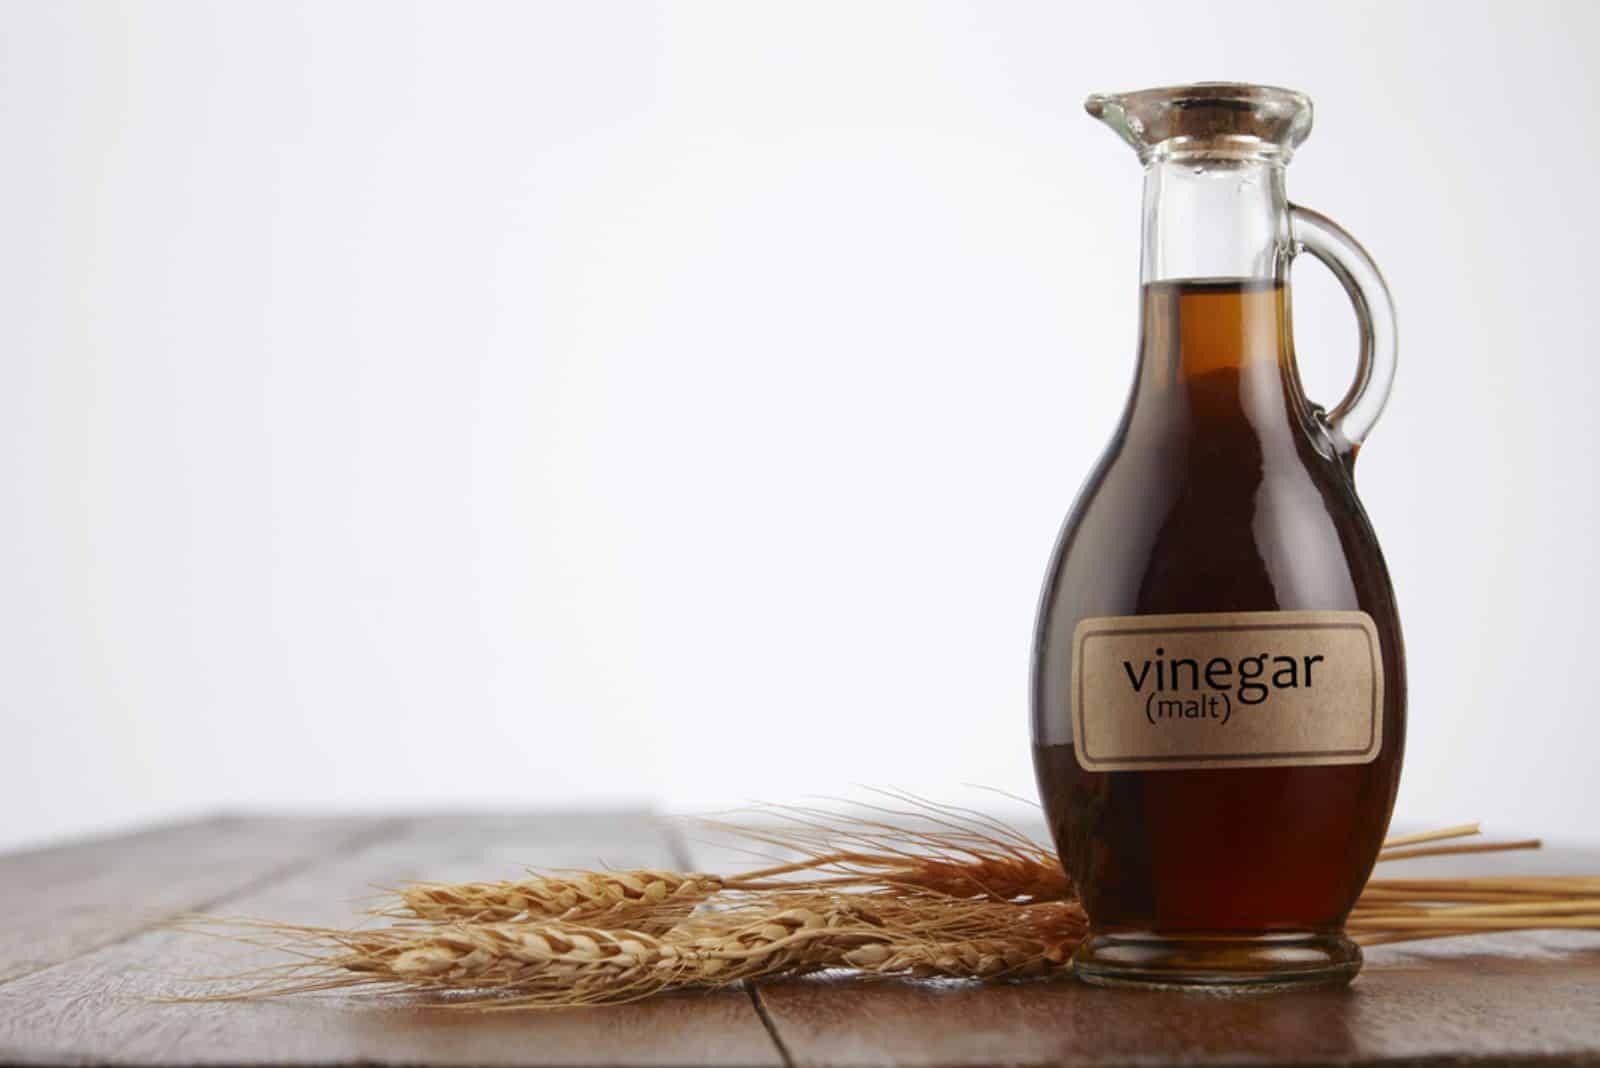 malt vinegar on the wooden table top